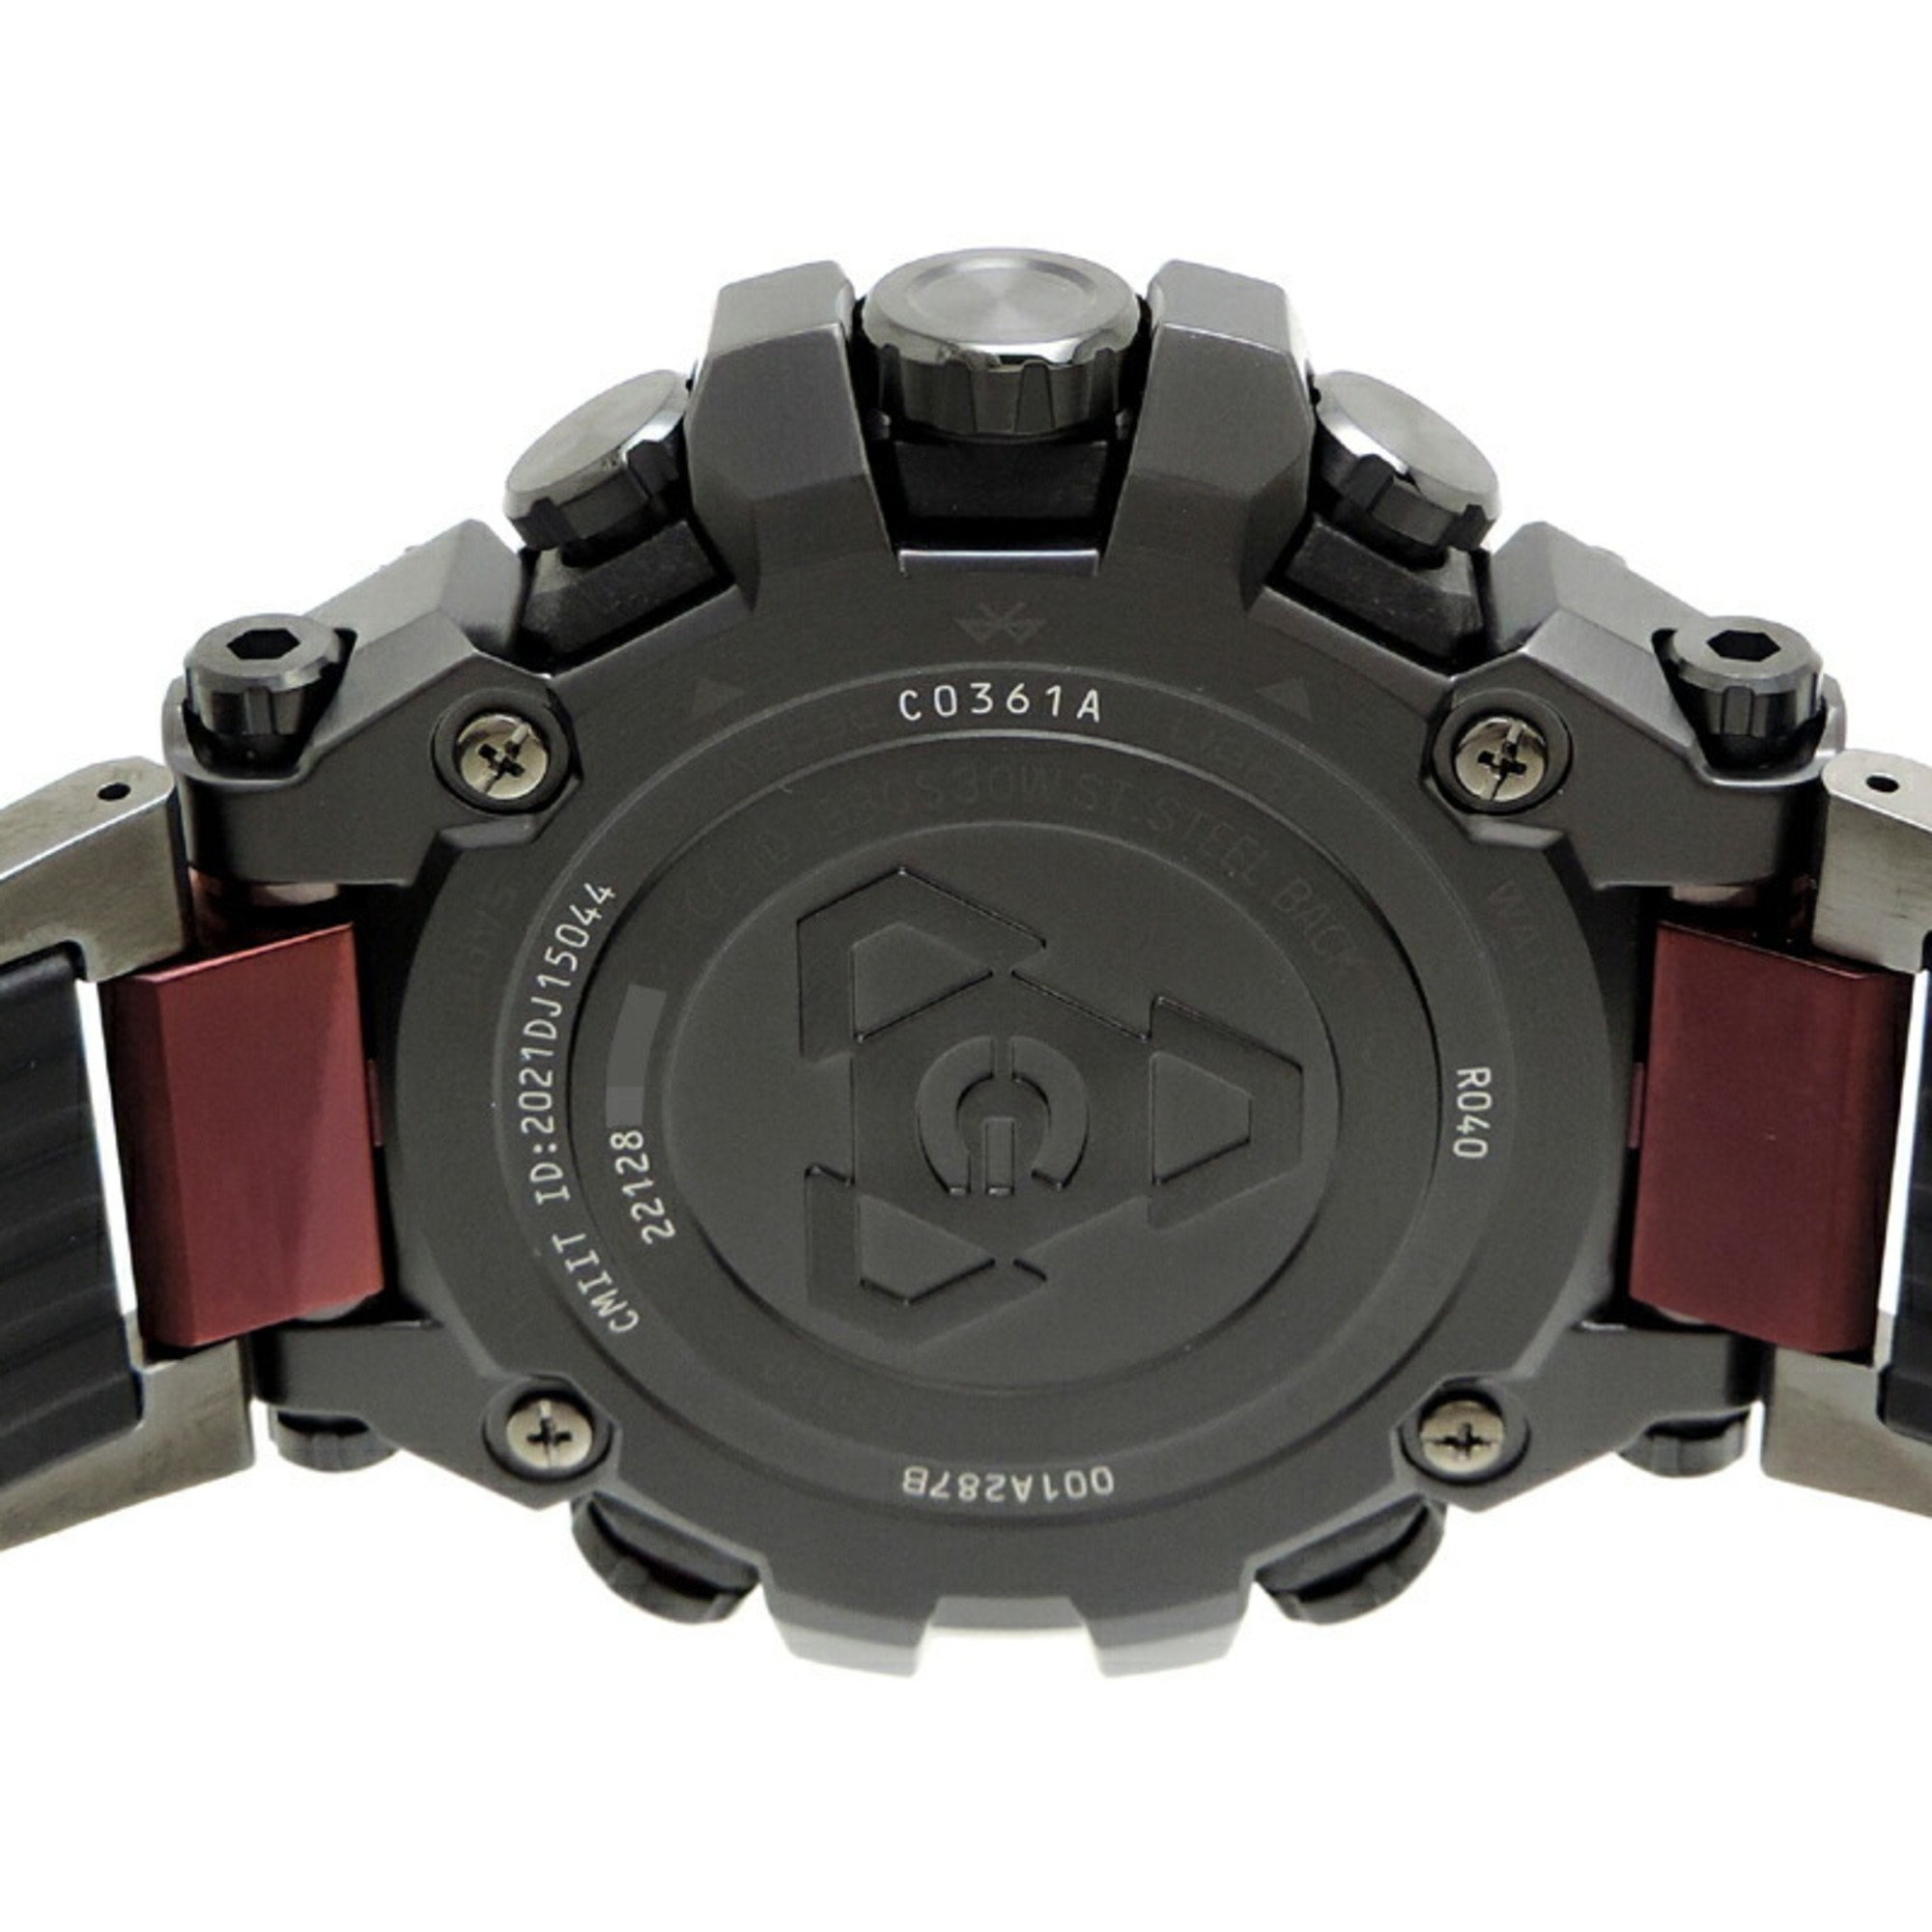 Casio G-SHOCK MT-G MTG-B3000 Series Men's Watch MTG-B3000BD-1AJF